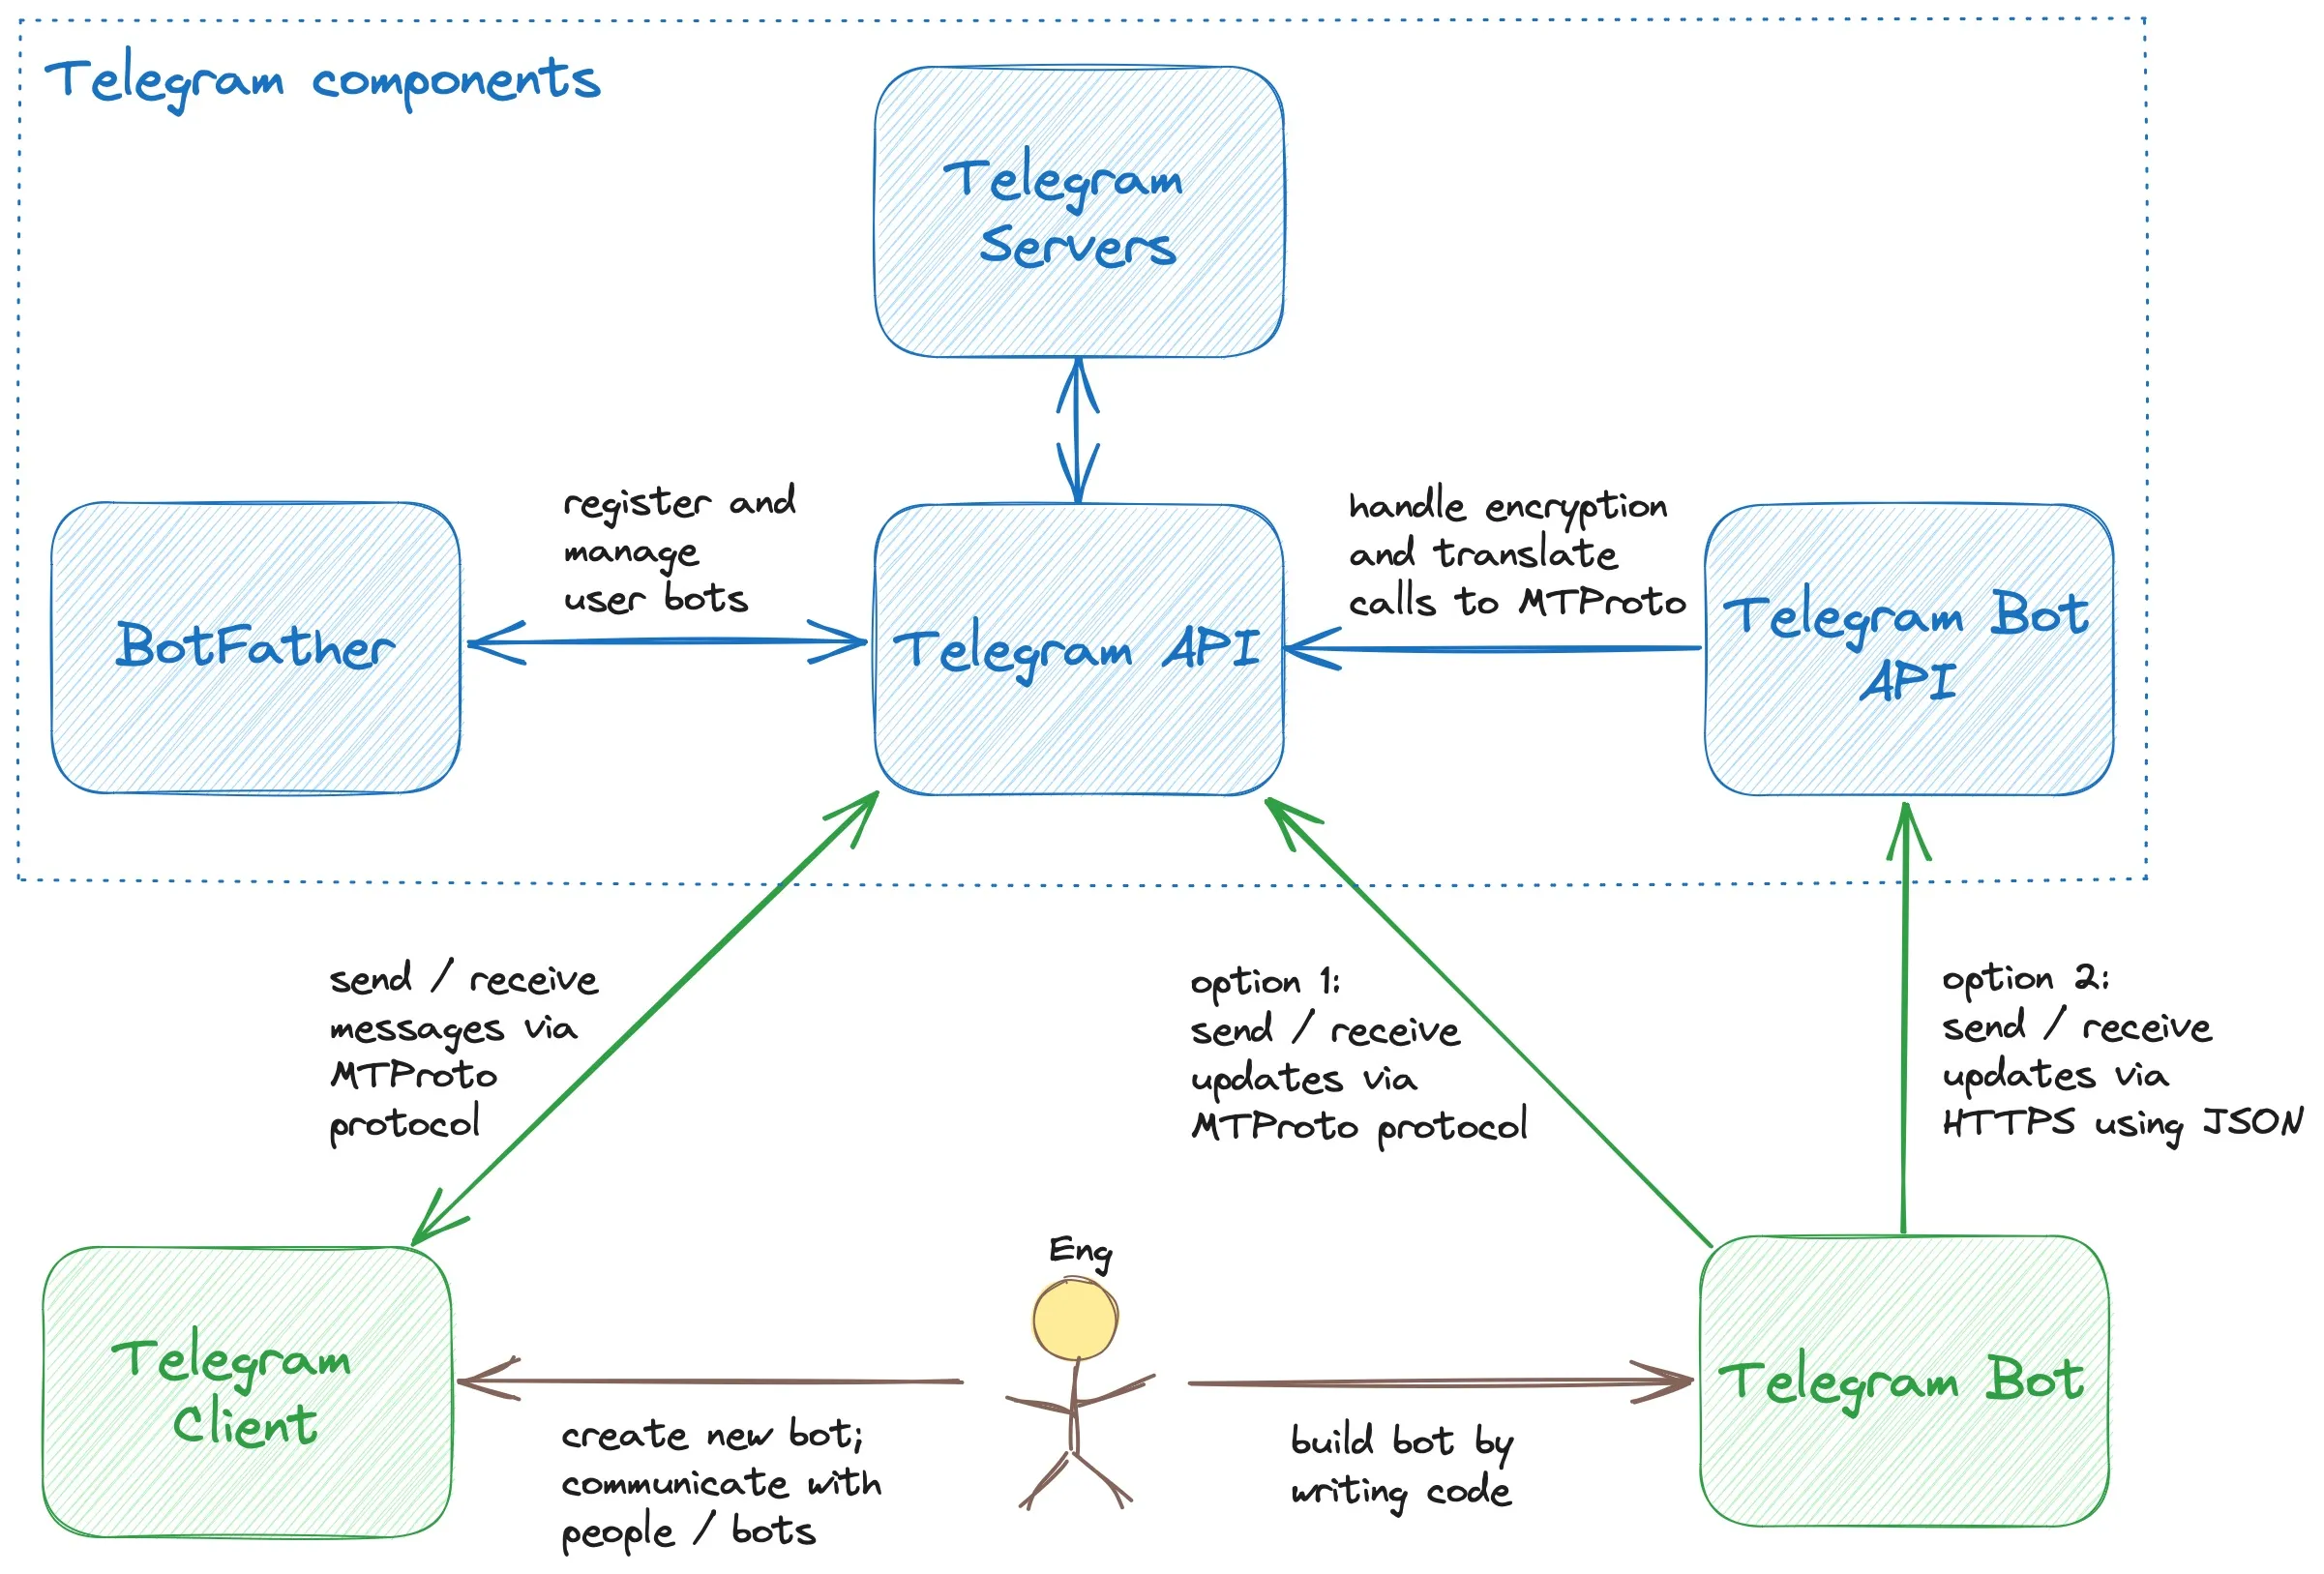 Figure 2. Telegram system components